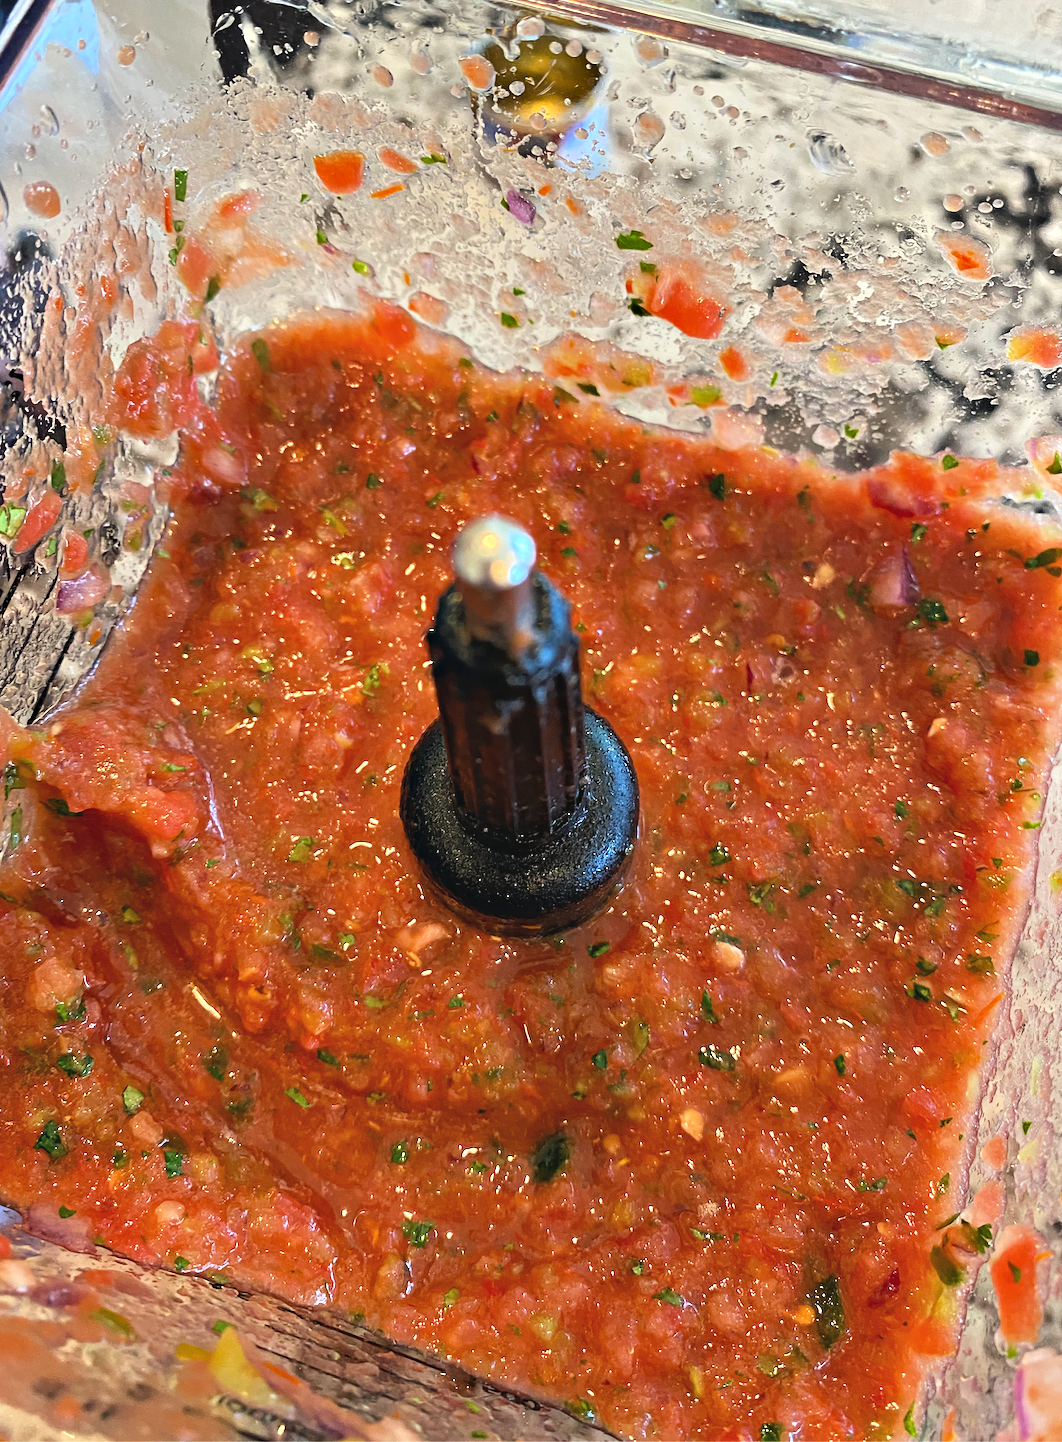 restaurant style salsa in a blender